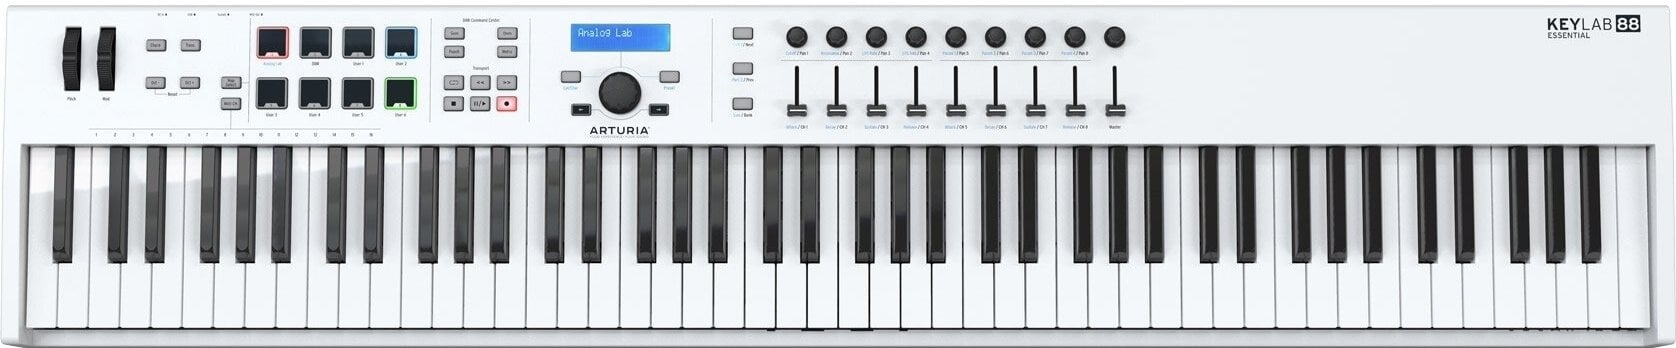 Clavier MIDI Arturia KeyLab Essential 88